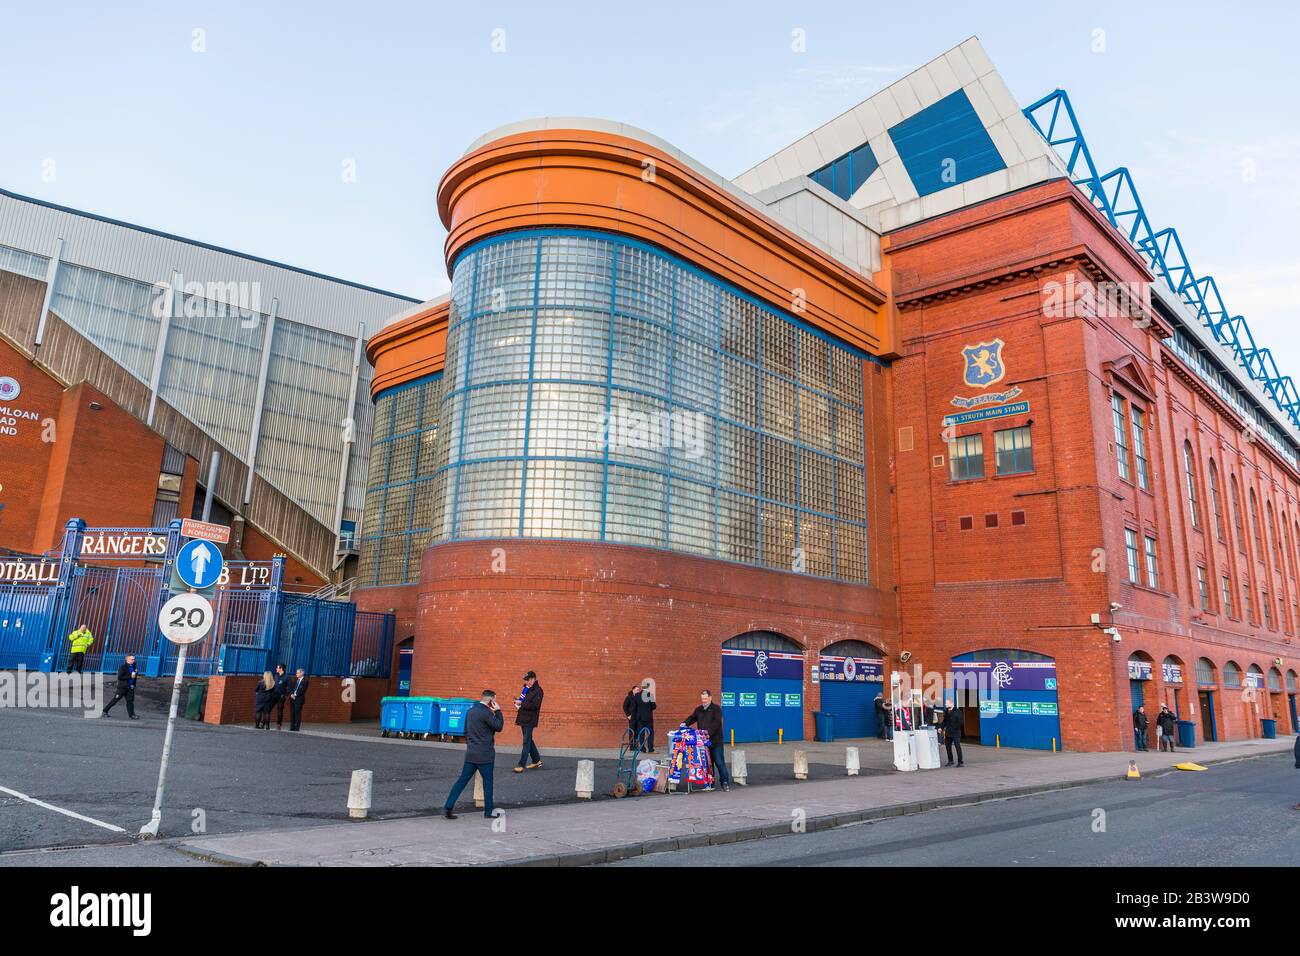 Stade de football Ibrox, stade de football des Rangers, Govan, Glasgow, Écosse, Royaume-Uni Banque D'Images